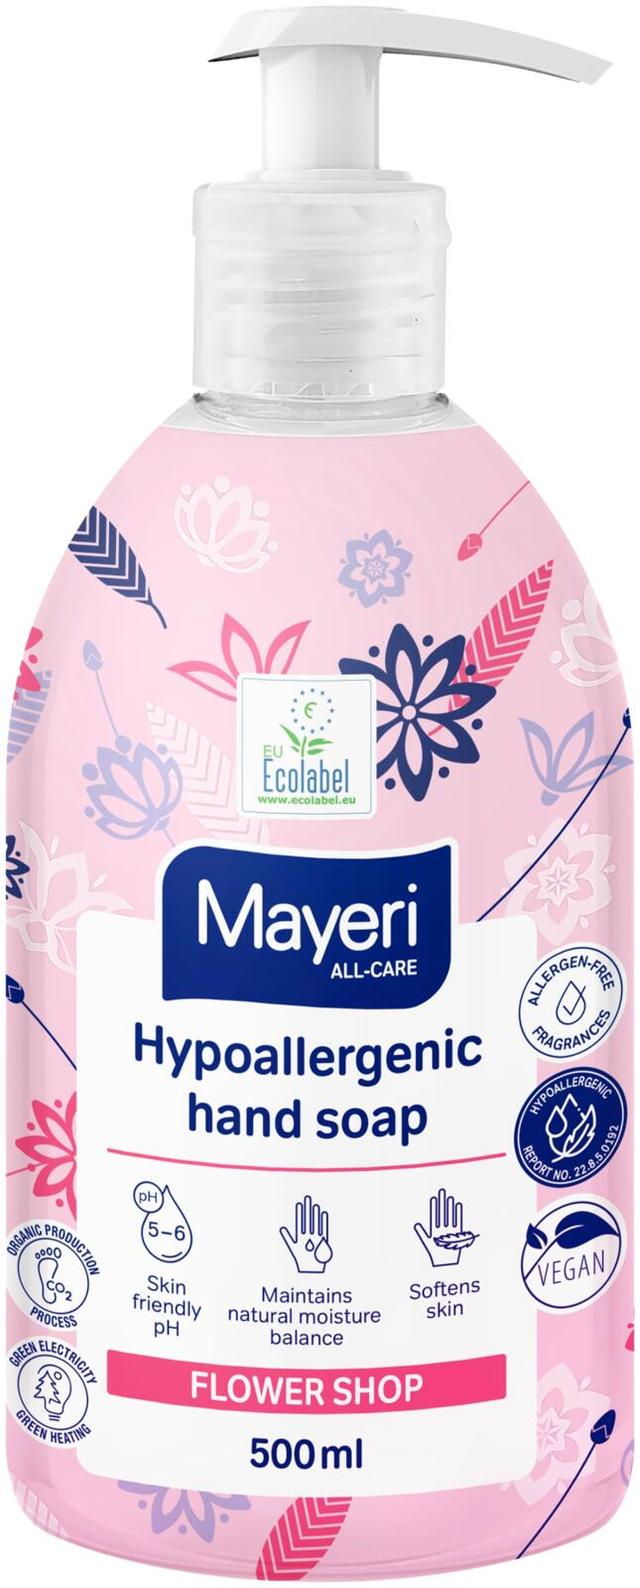 Mayeri All-Care nestesaippua hypoallergeeninen Flower Shop 500ml pumppupullo